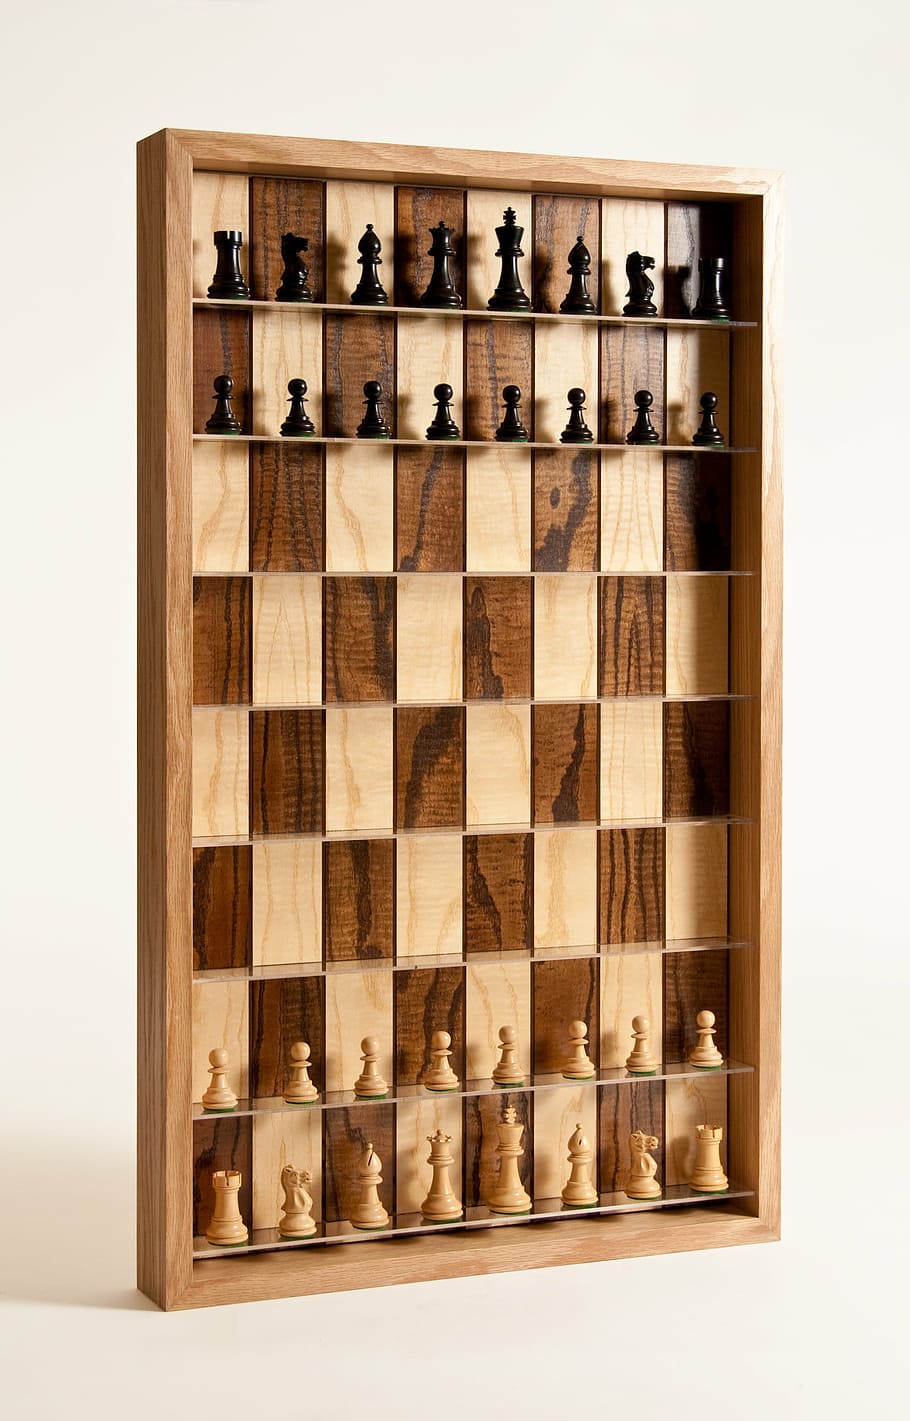 ajedrez, tablero de ajedrez vertical, ajedrez 3d, vertical, juego, ajedrecista, tablero de ajedrez, en interiores, tiro de estudio, juego de mesa